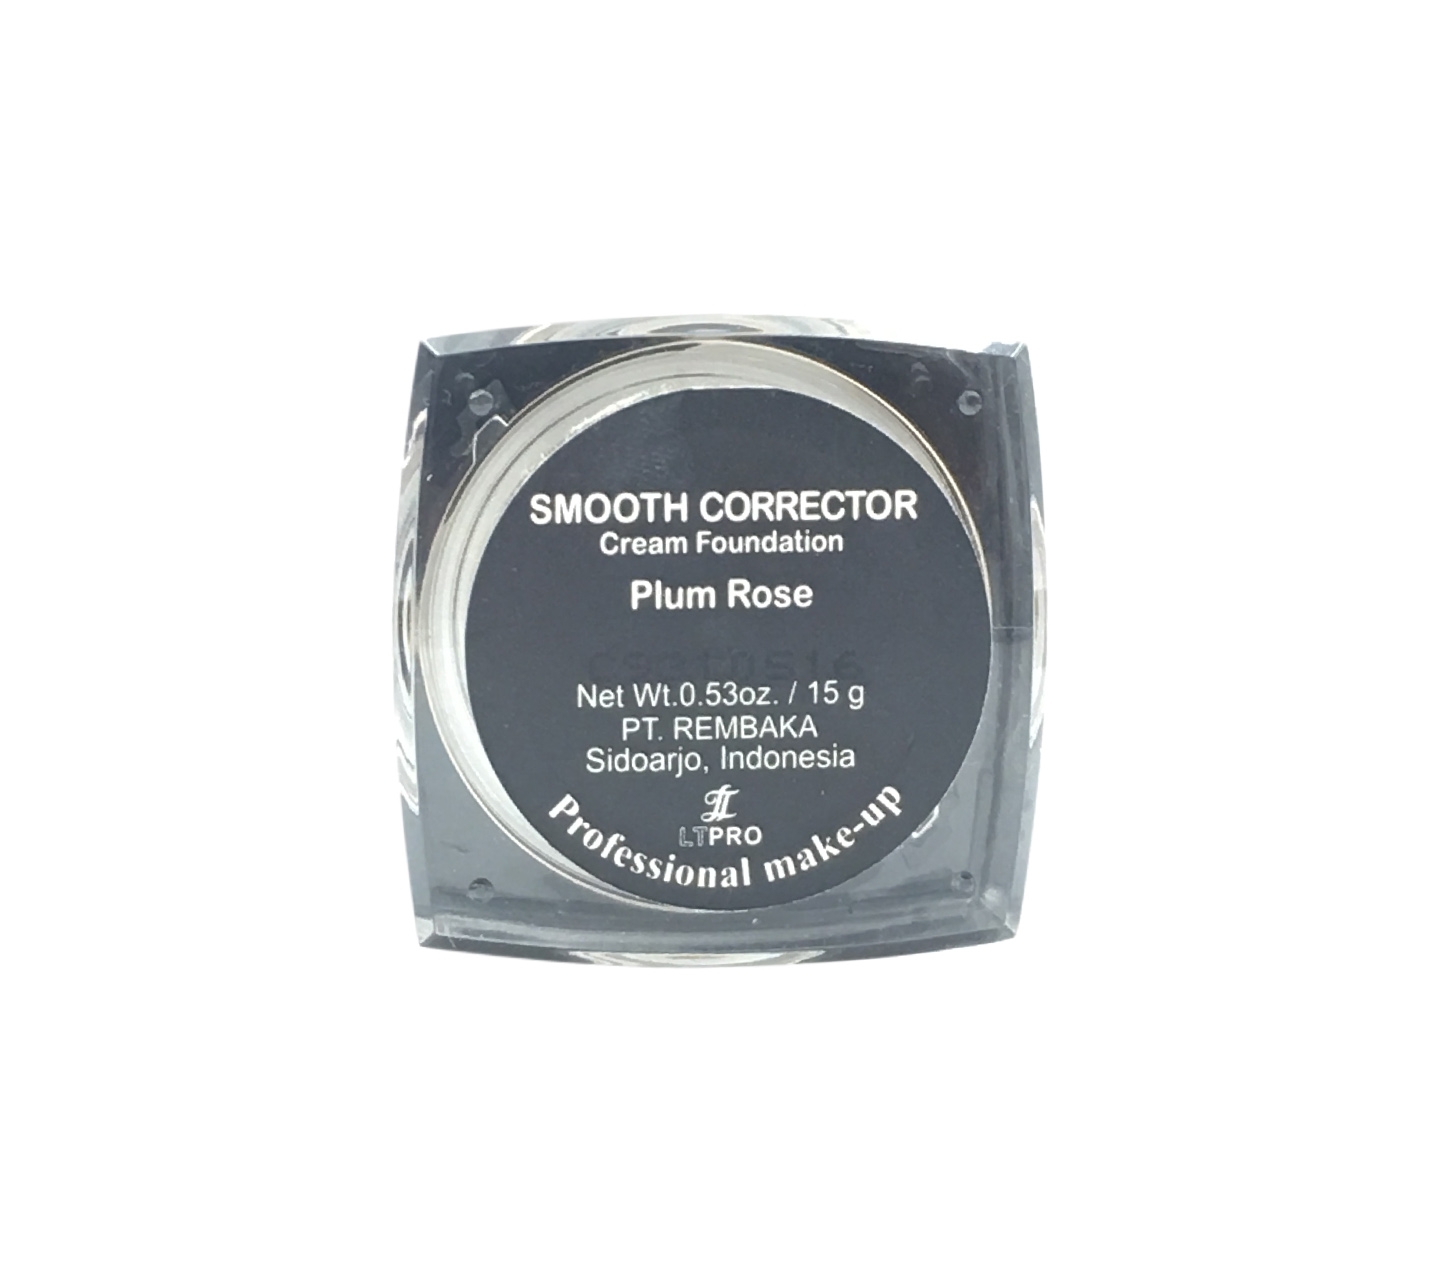 LT Pro Pulm Rose Smooth Corrector Cream Foundation Faces